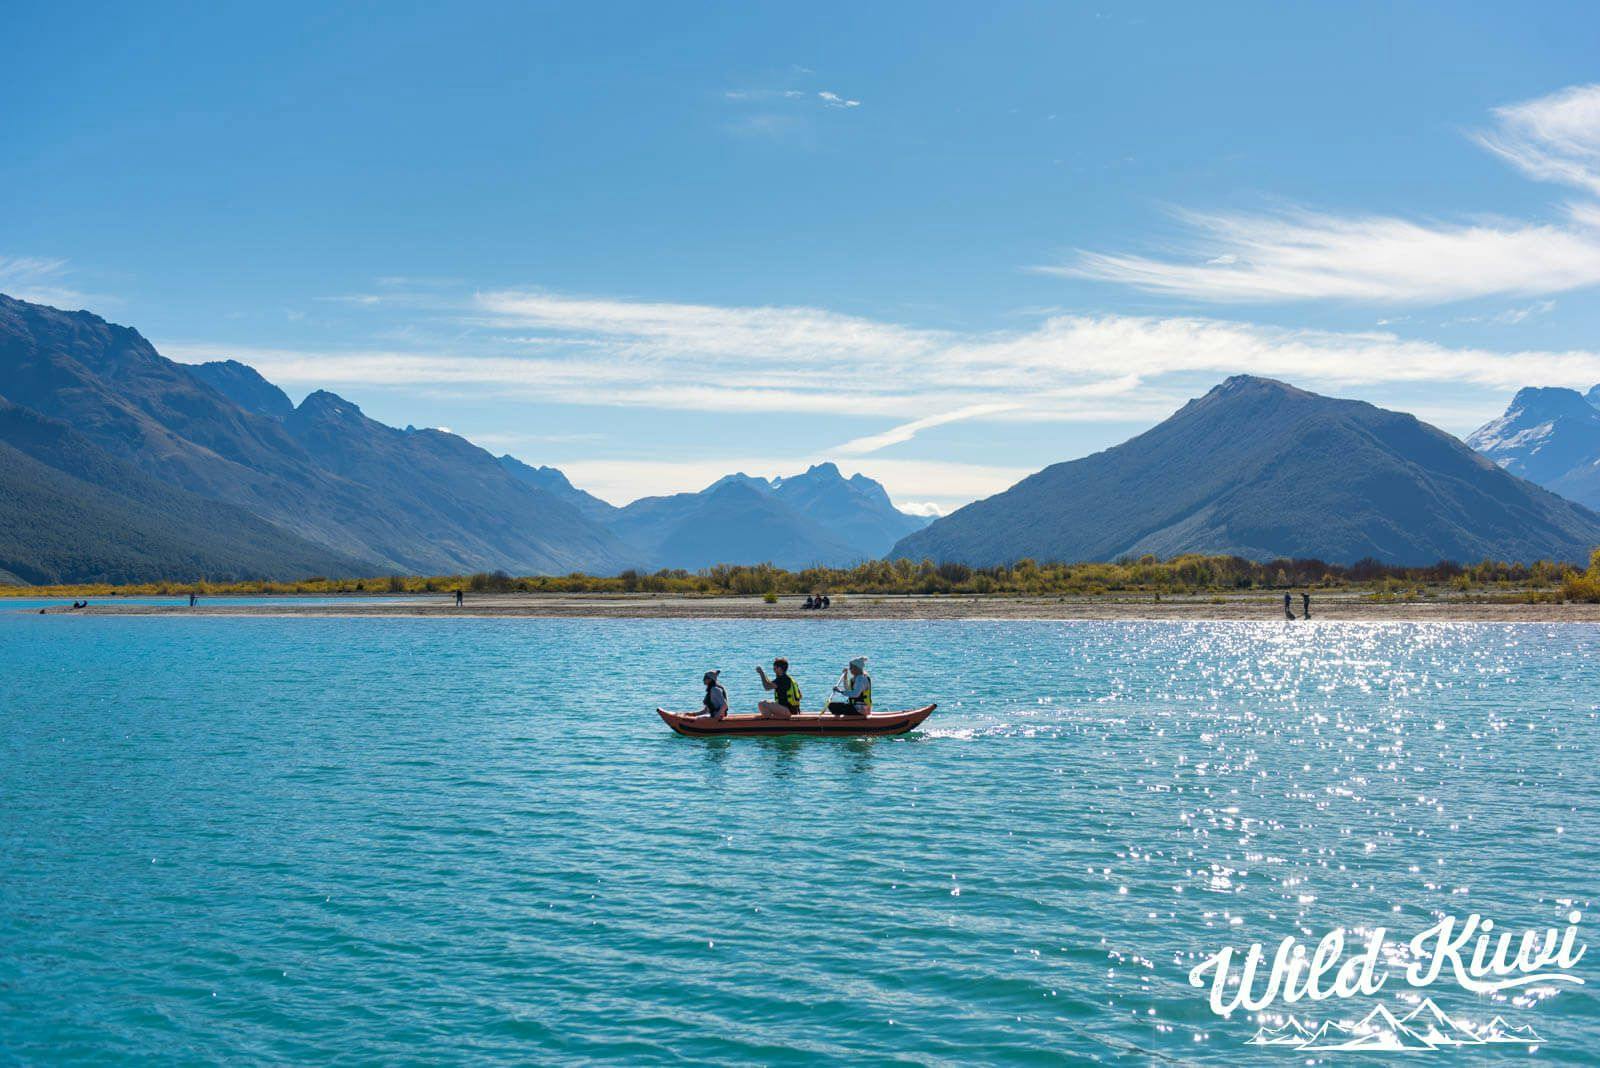 Come alive on NZ tours - Ski, kayak and swim